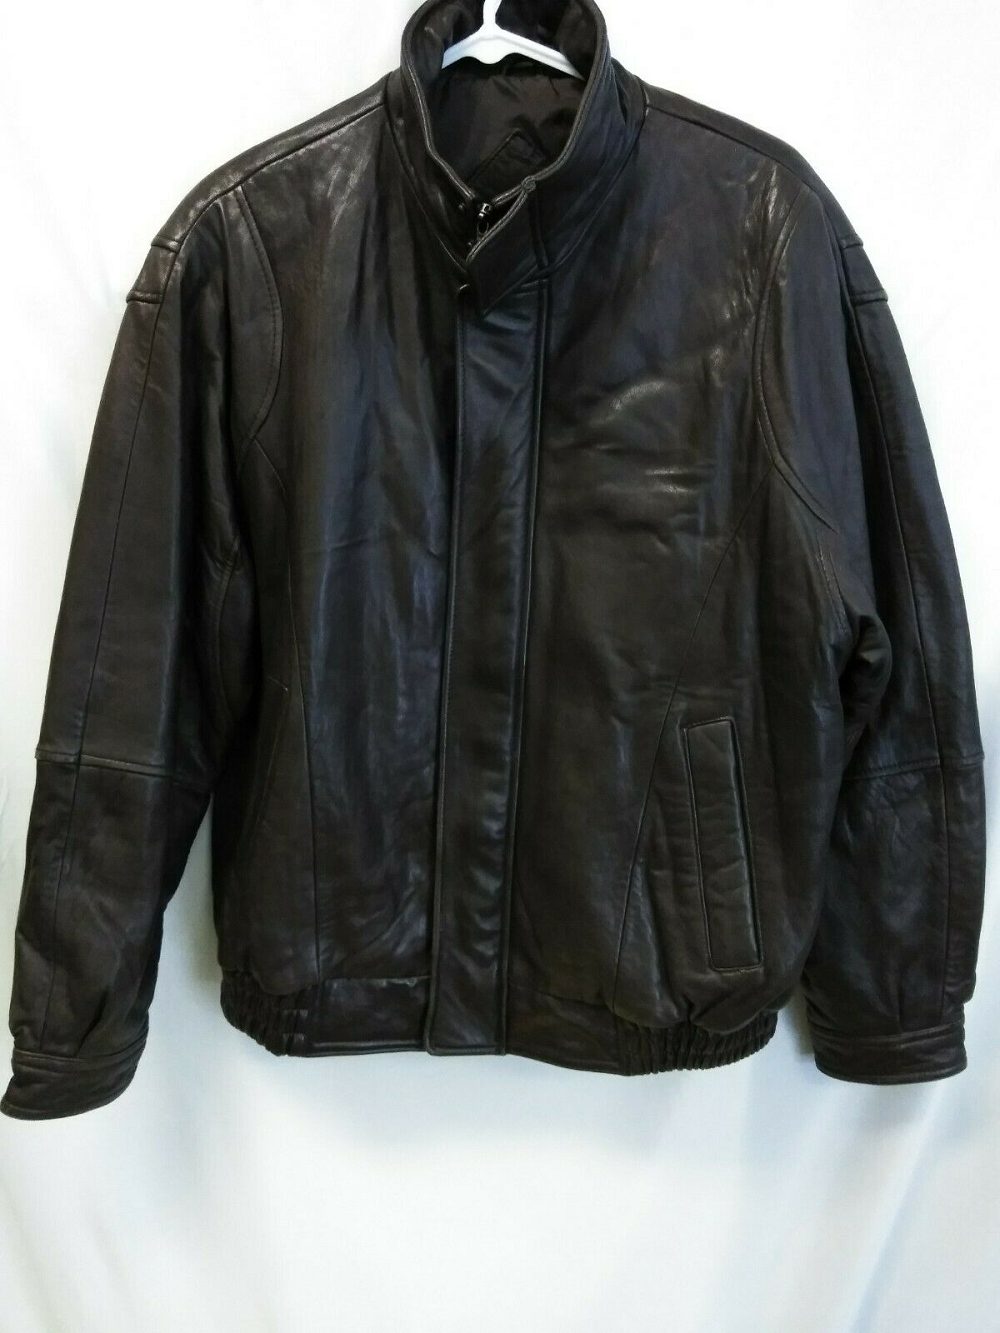 Brandini Le Collezioni Bomber Leather Jacket - A2 Jackets